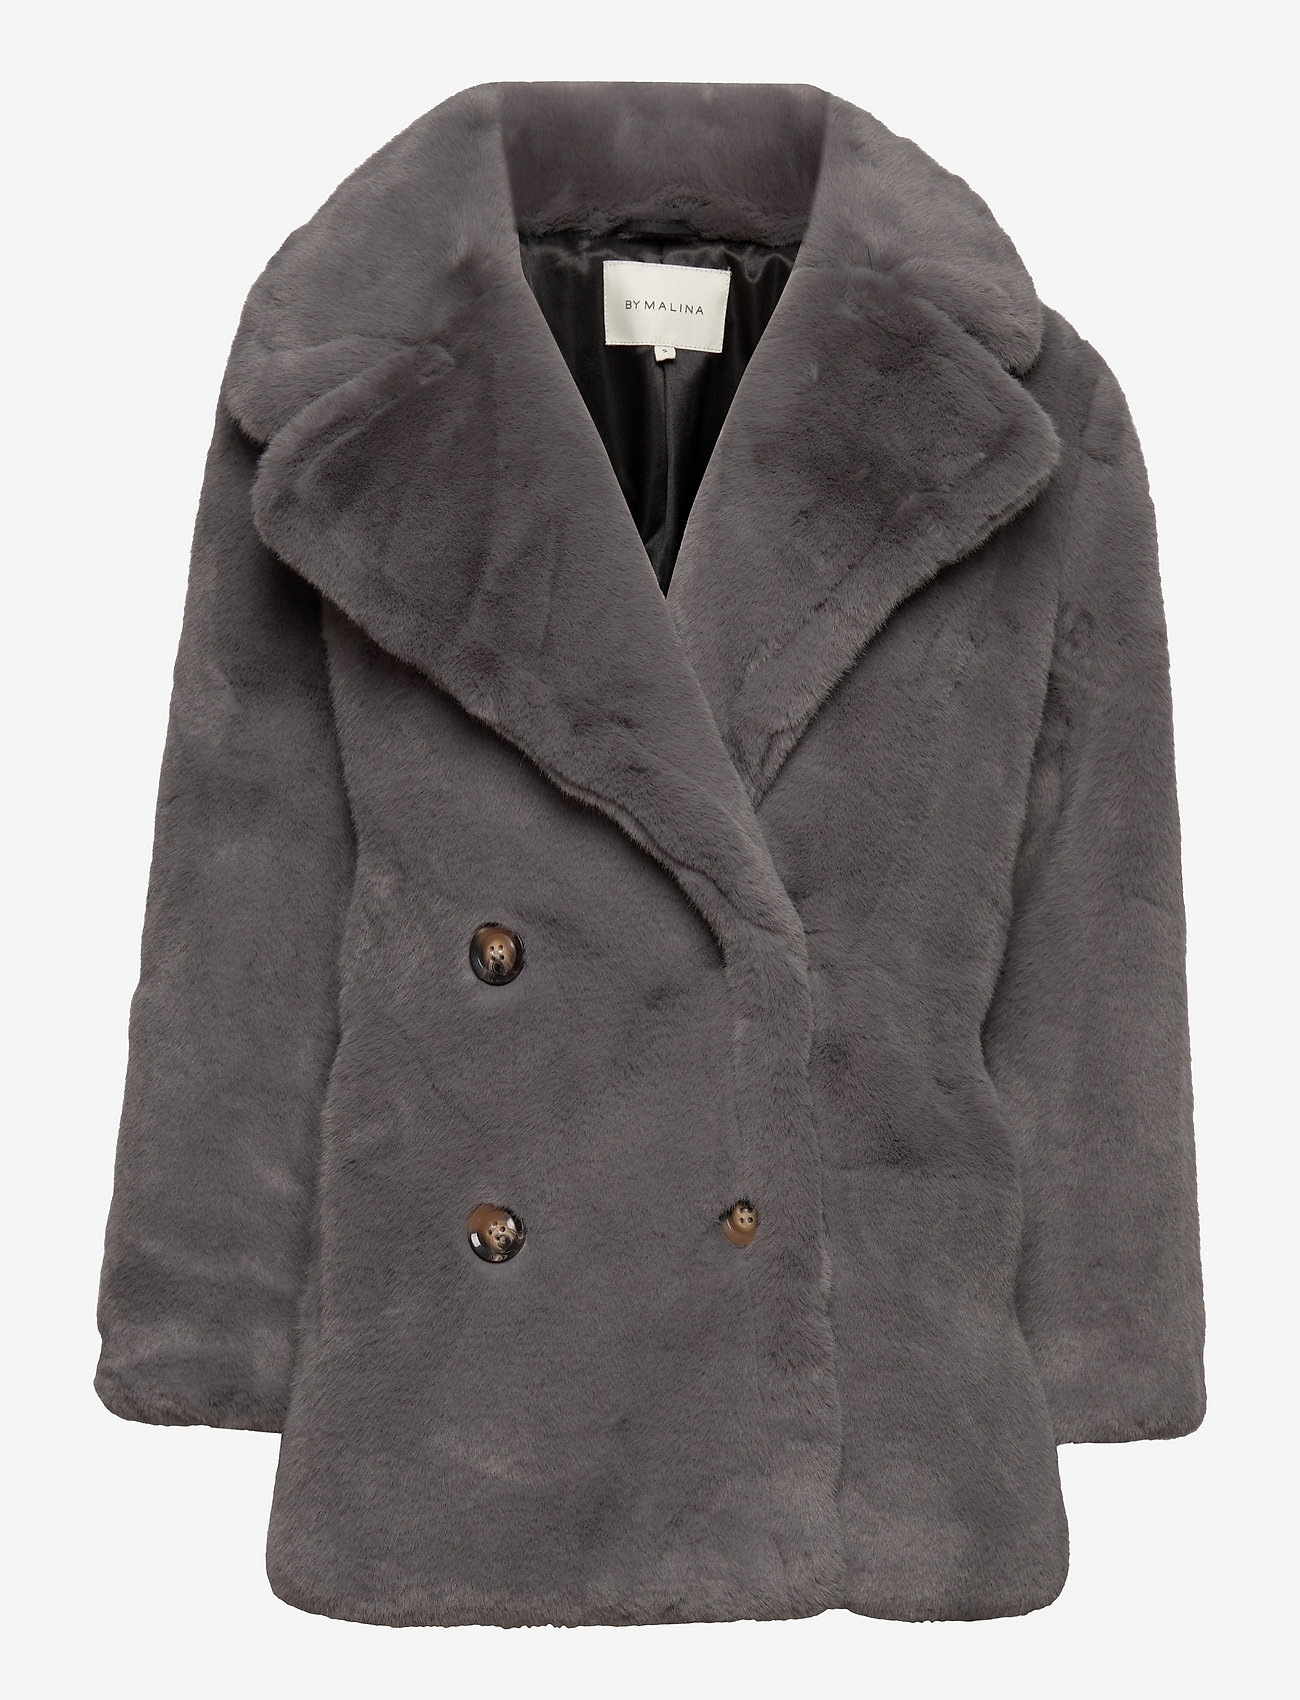 Malina - Halley faux fur jacket - faux fur - charcoal - 0